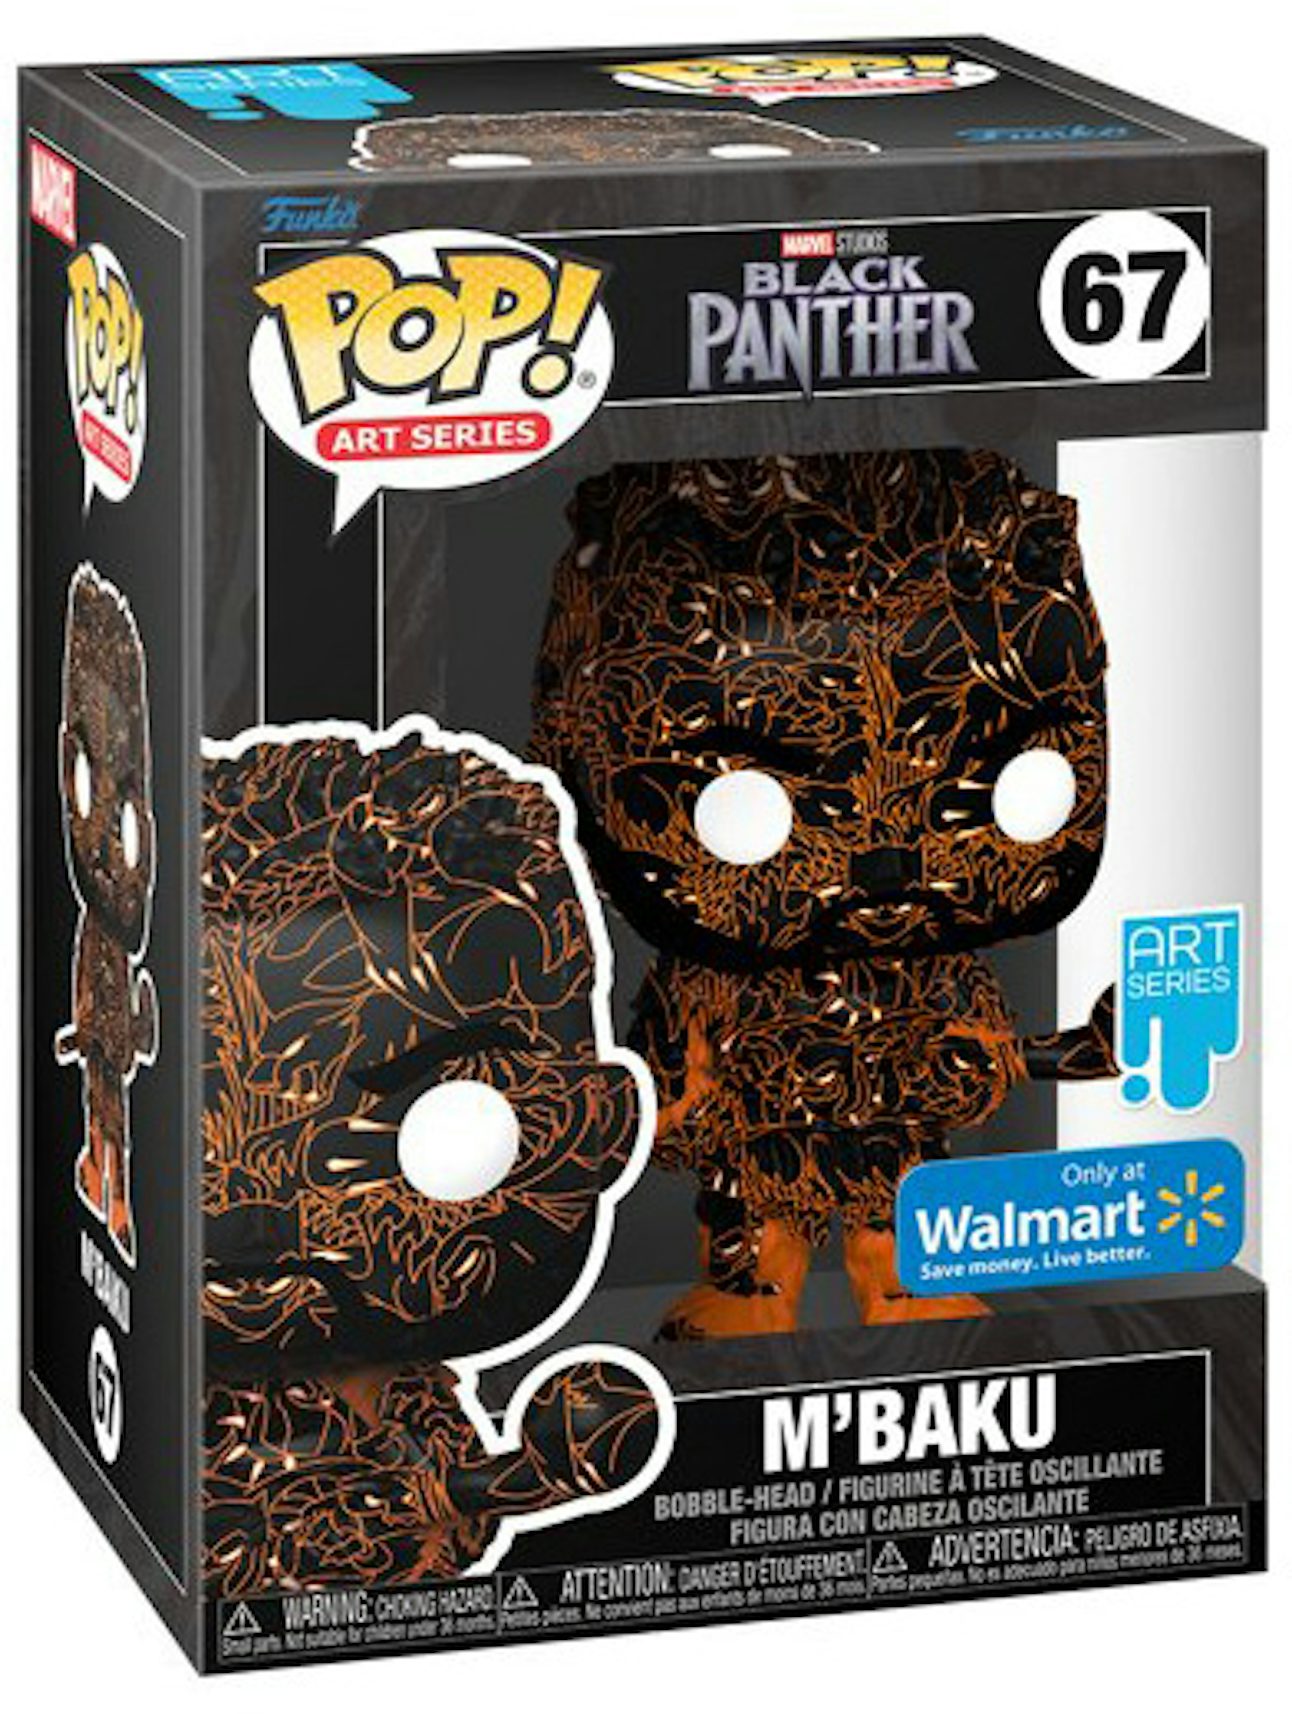 Funko Pop! Art Series Marvel Studios Black Panther M'Baku Art Series  Walmart Exclusive Figure #67 - Us